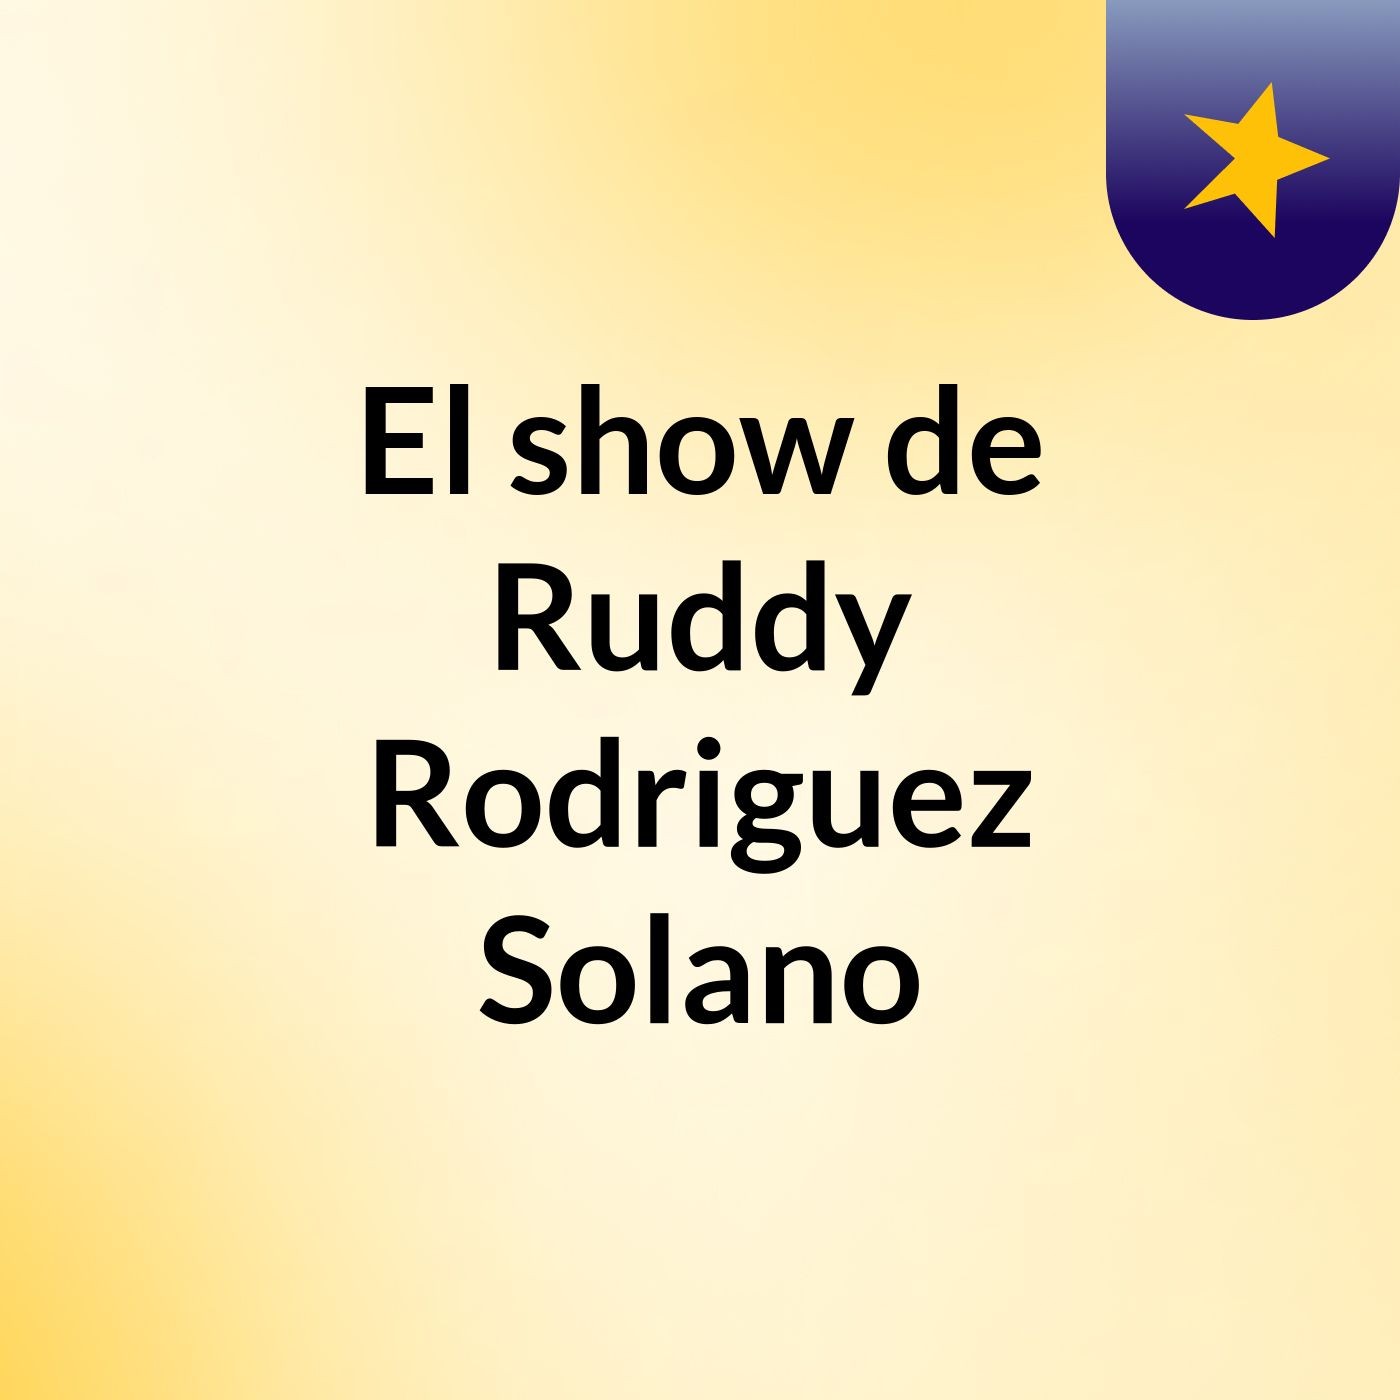 El show de Ruddy Rodriguez Solano